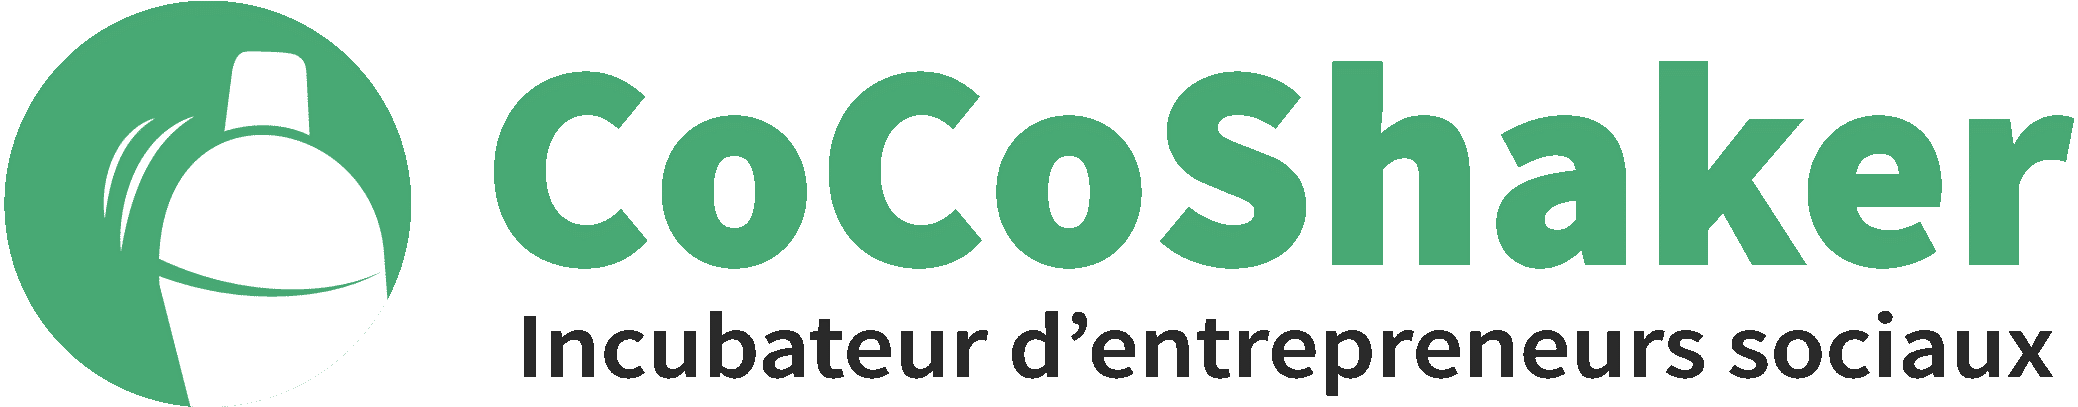 logo cocoshaker